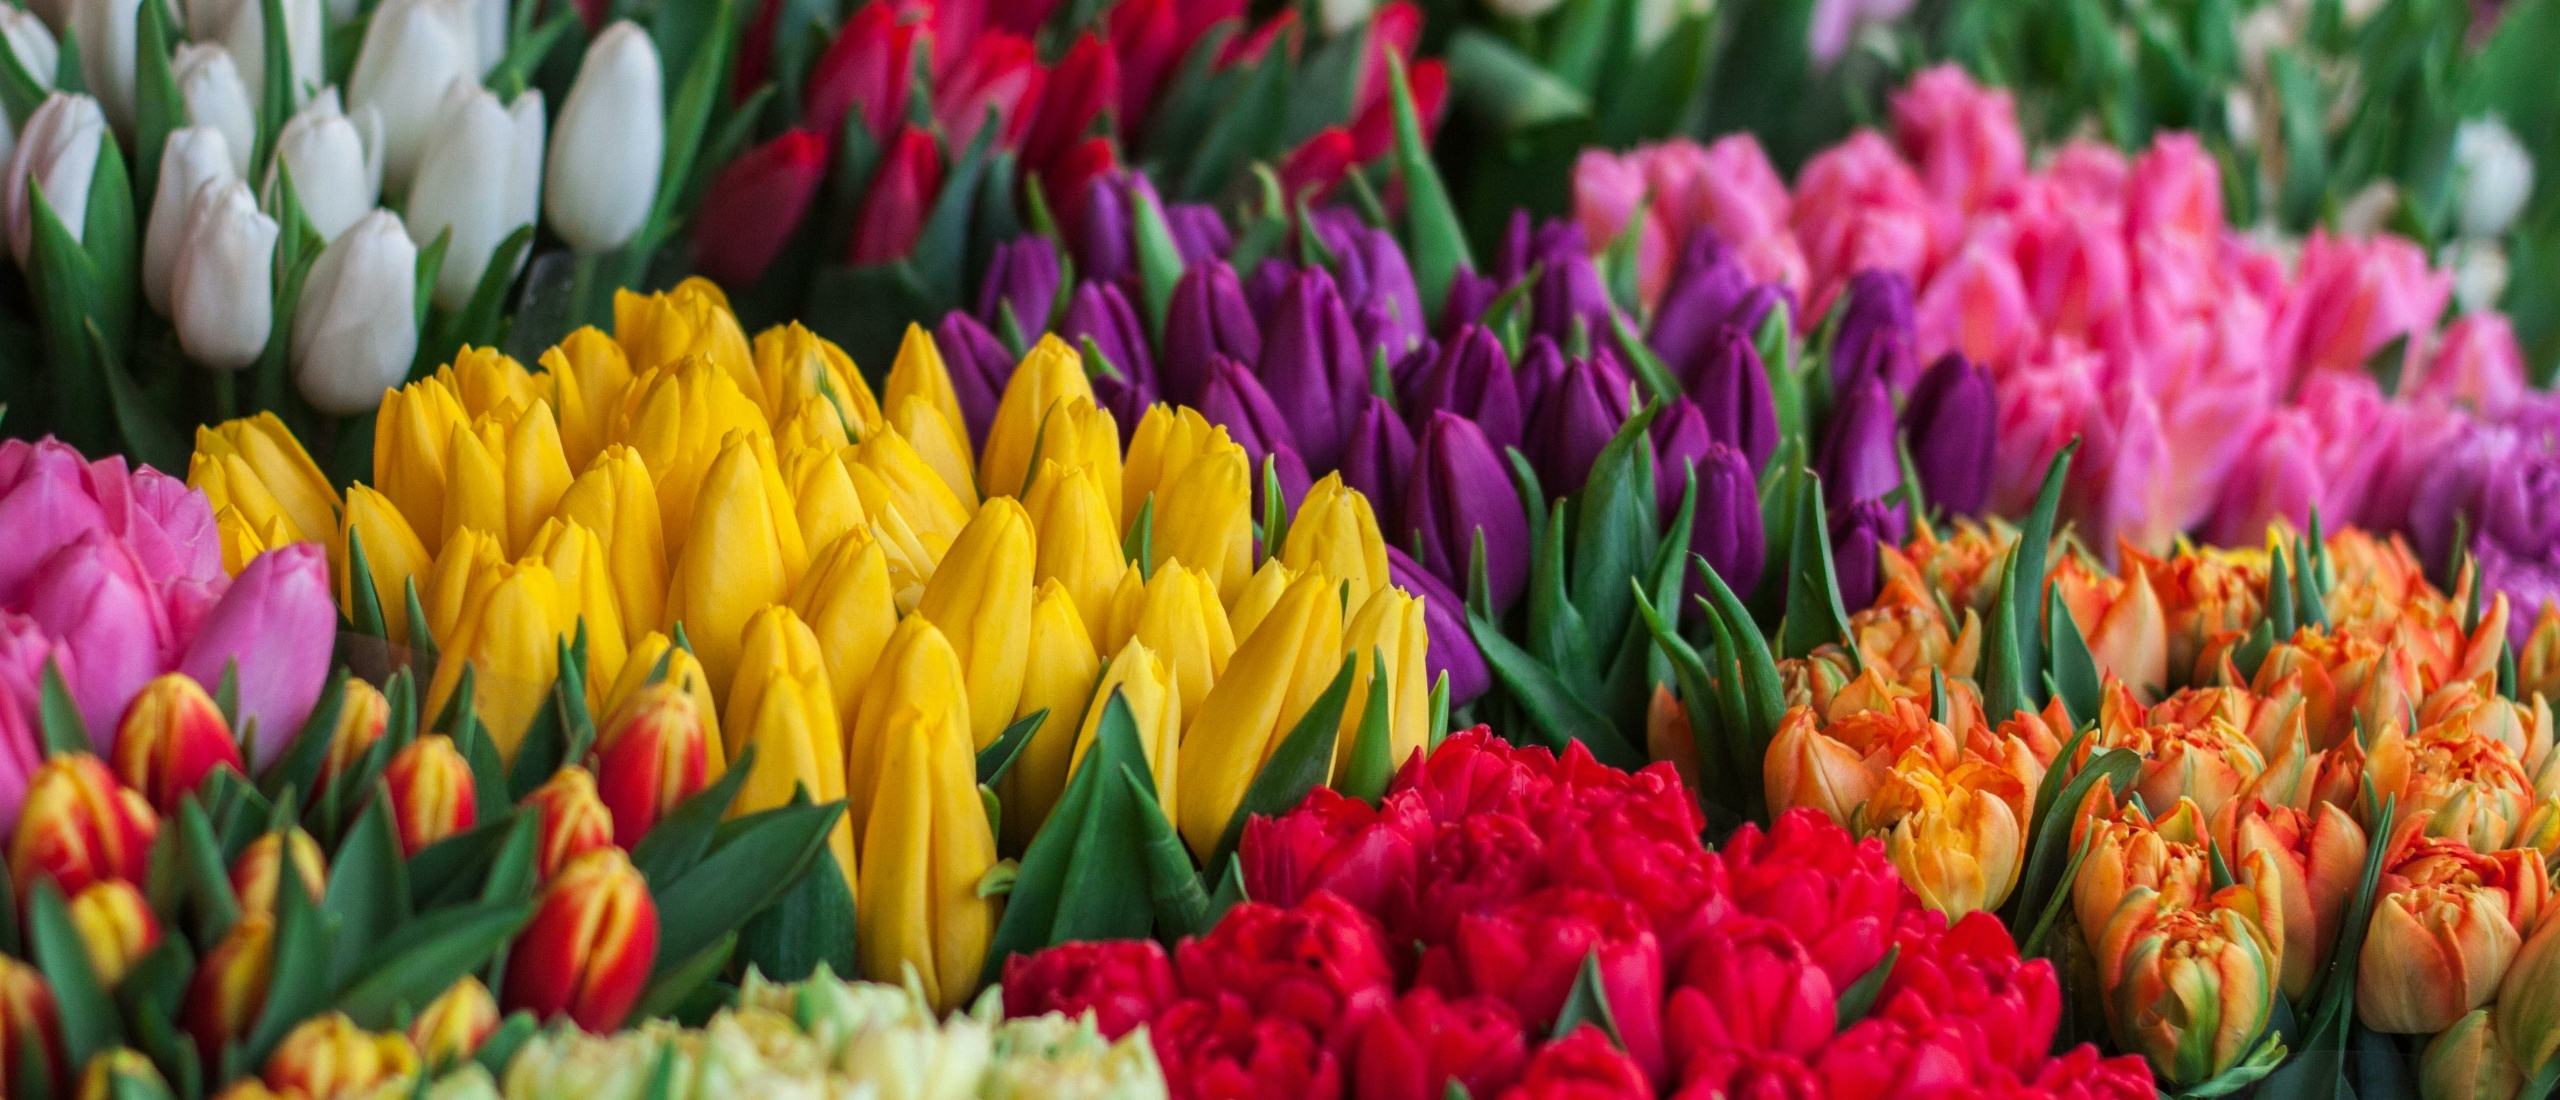 history of tulips